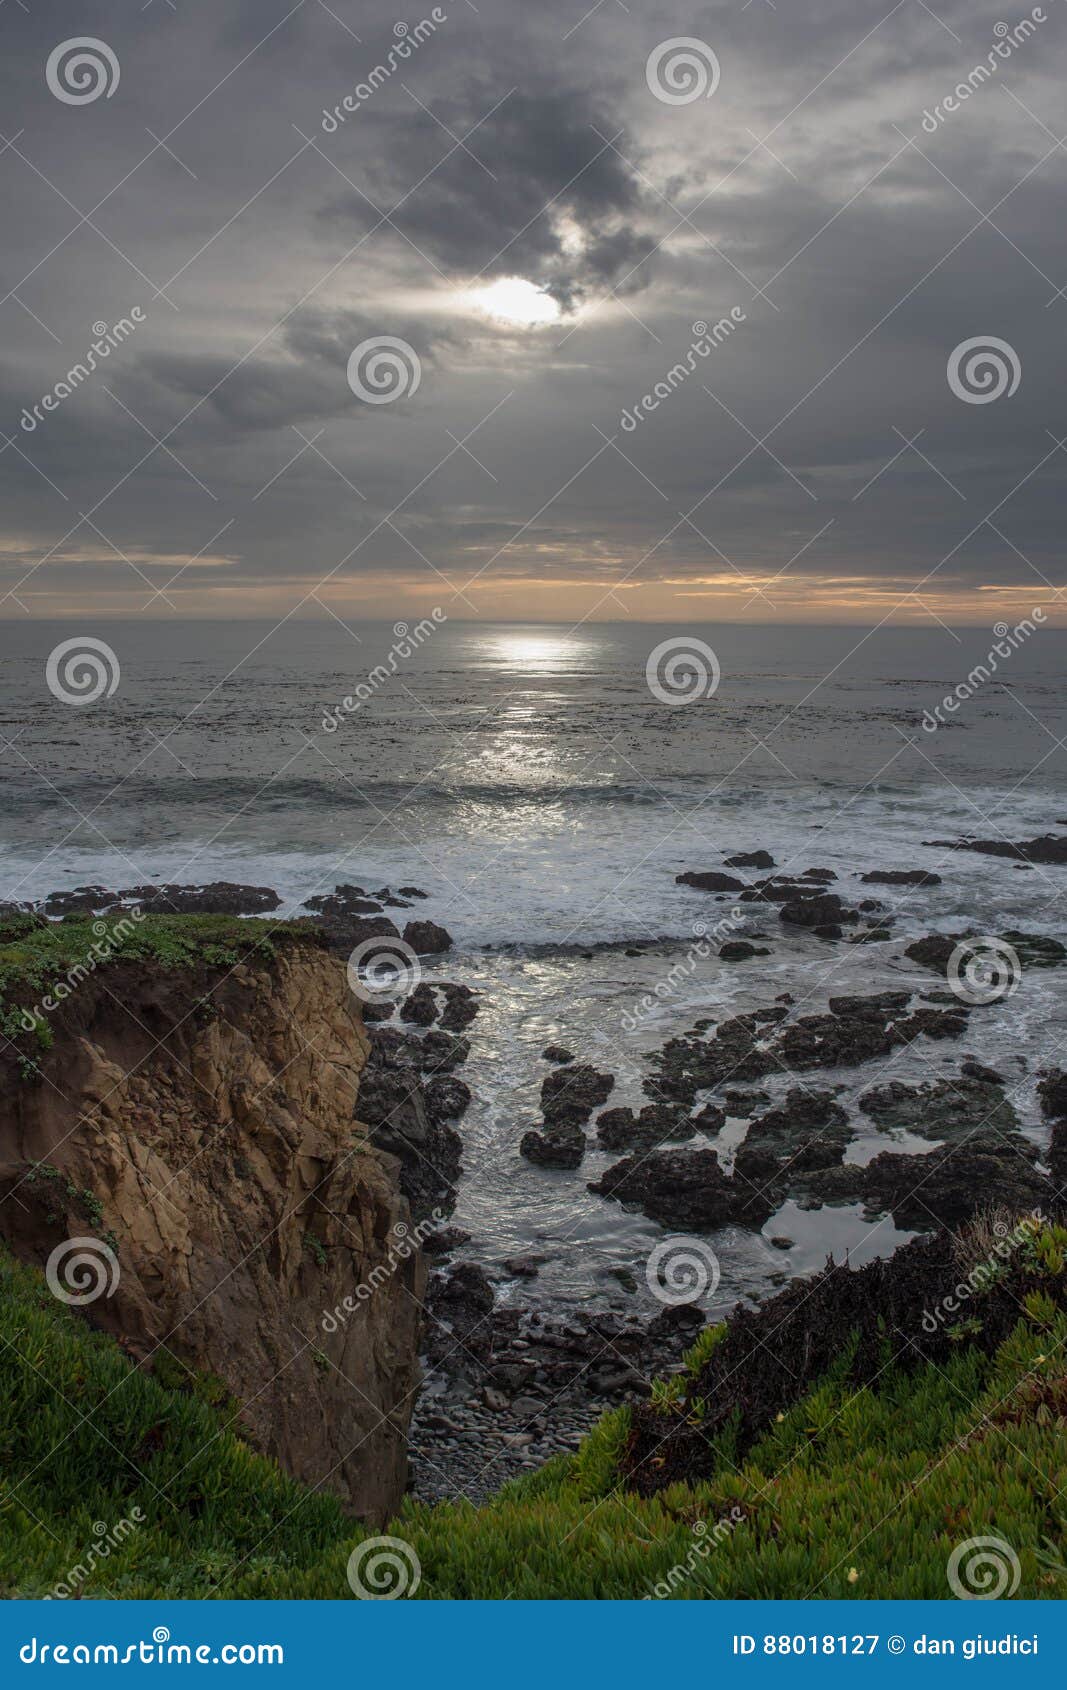 Beach Cliffs on the ocean. Beach Cliffs by the ocean with rocks foreground